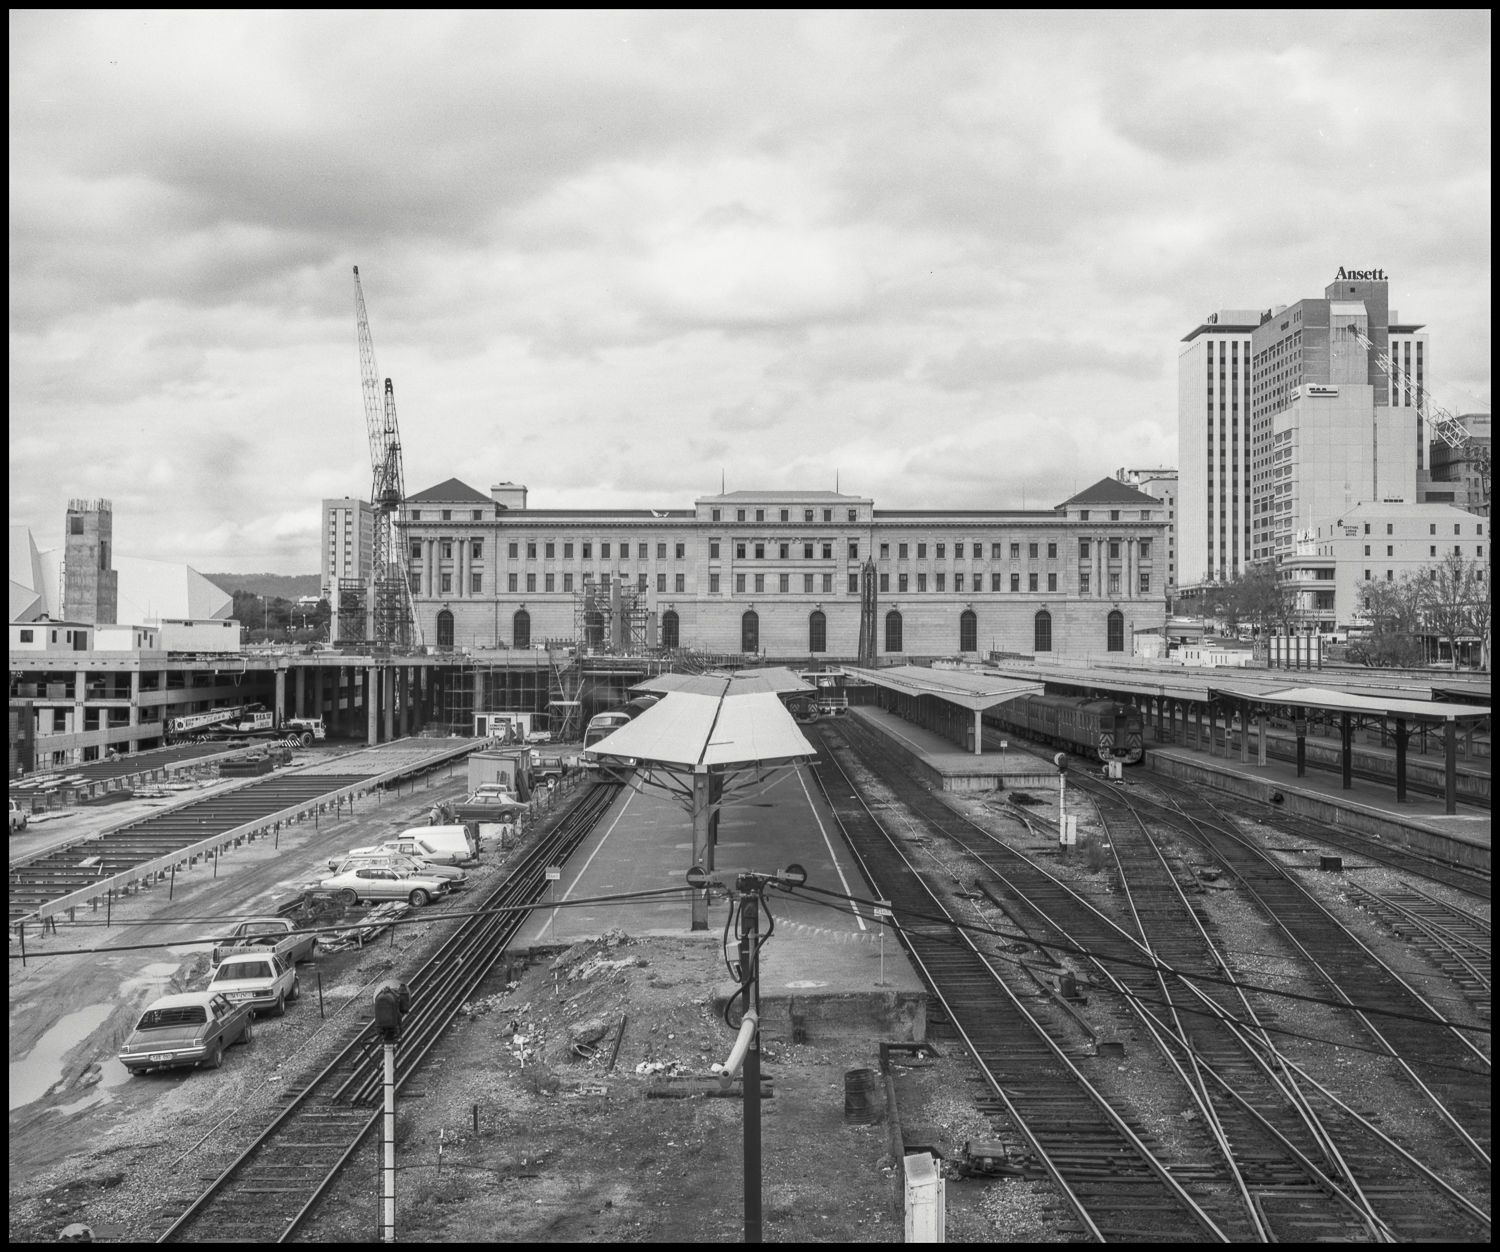 Adelaide railway station redevelopment